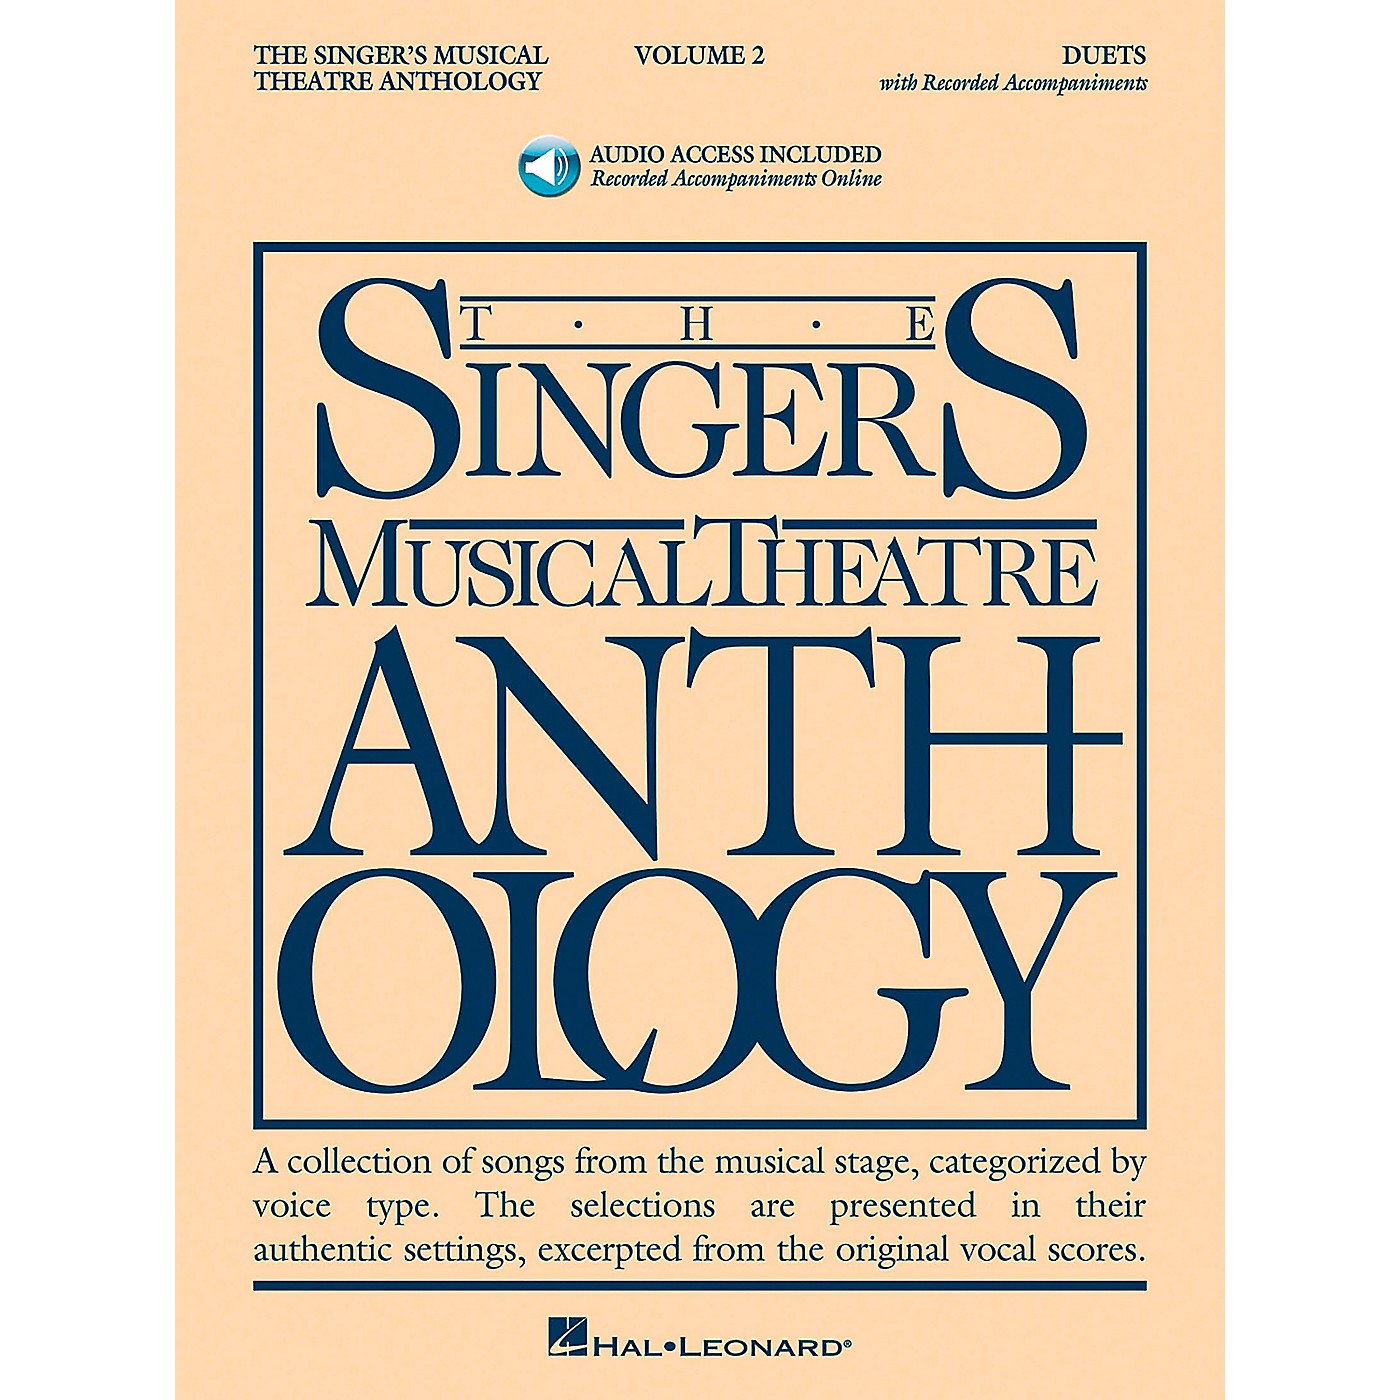 Hal Leonard Singer's Musical Theatre Anthology Duets Volume 2 Book/2CD's thumbnail